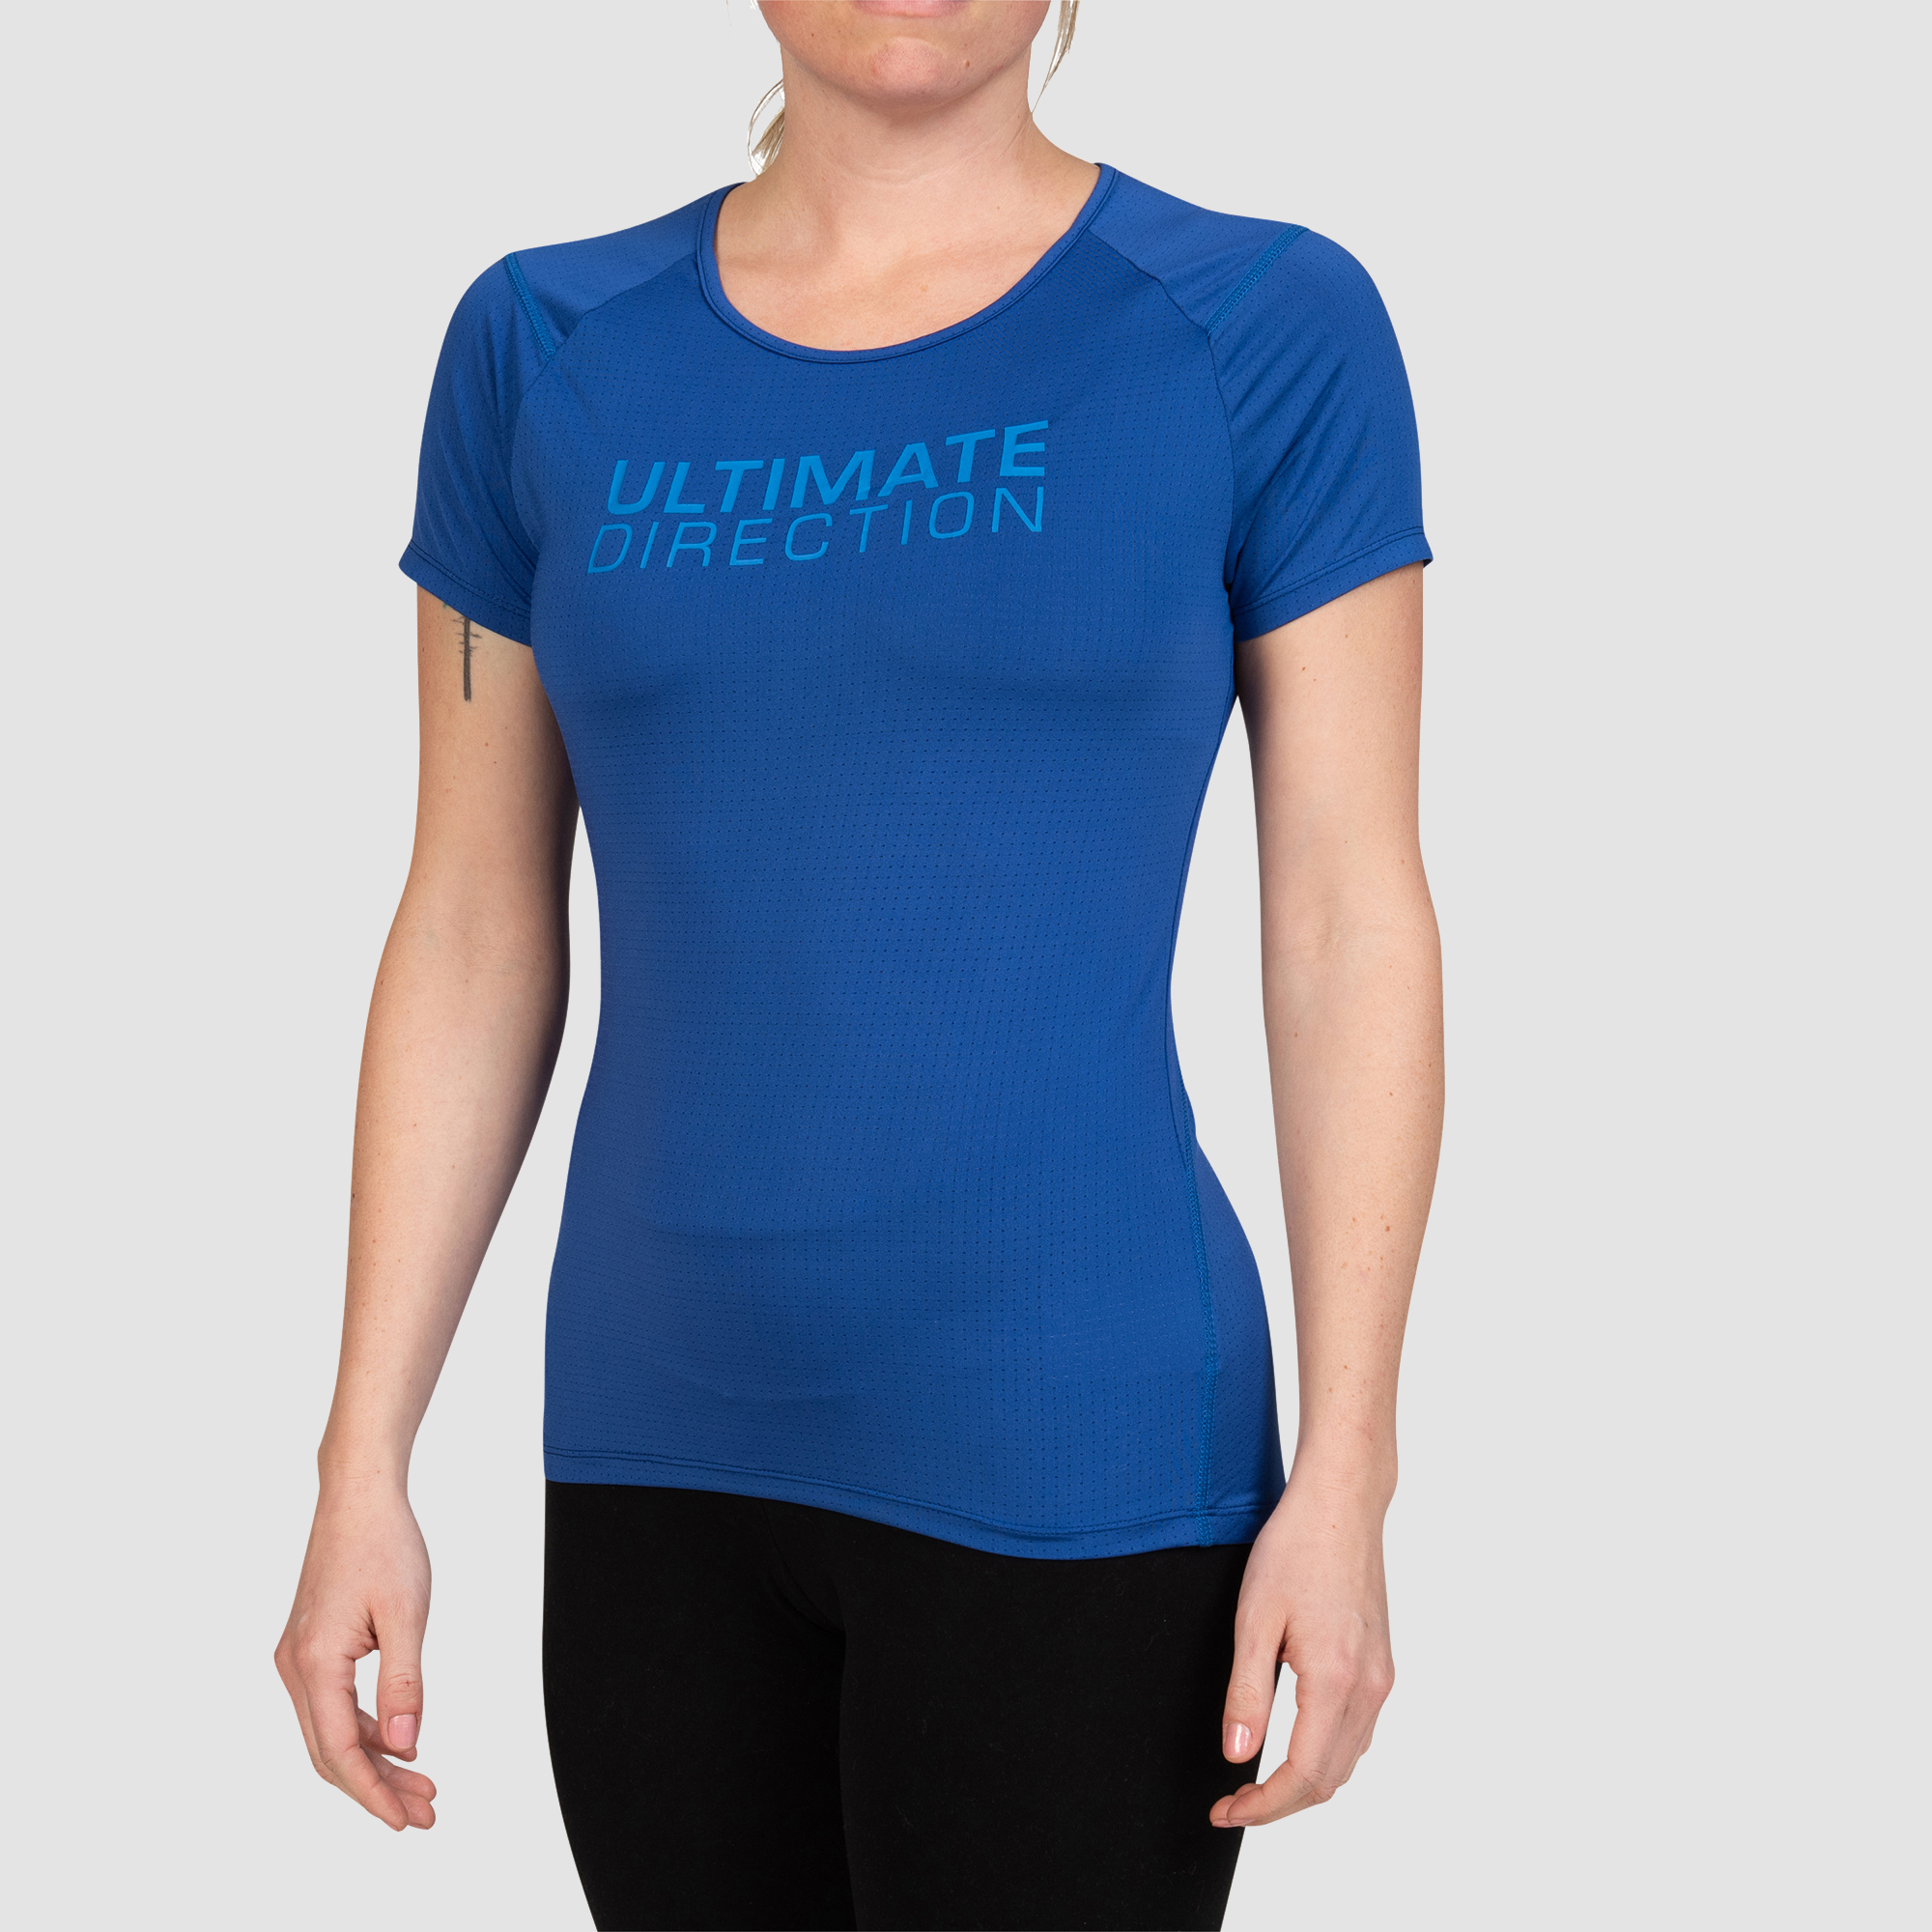 Ultimate Direction Women's Tech T-Shirt in Cyber Blue Size XS